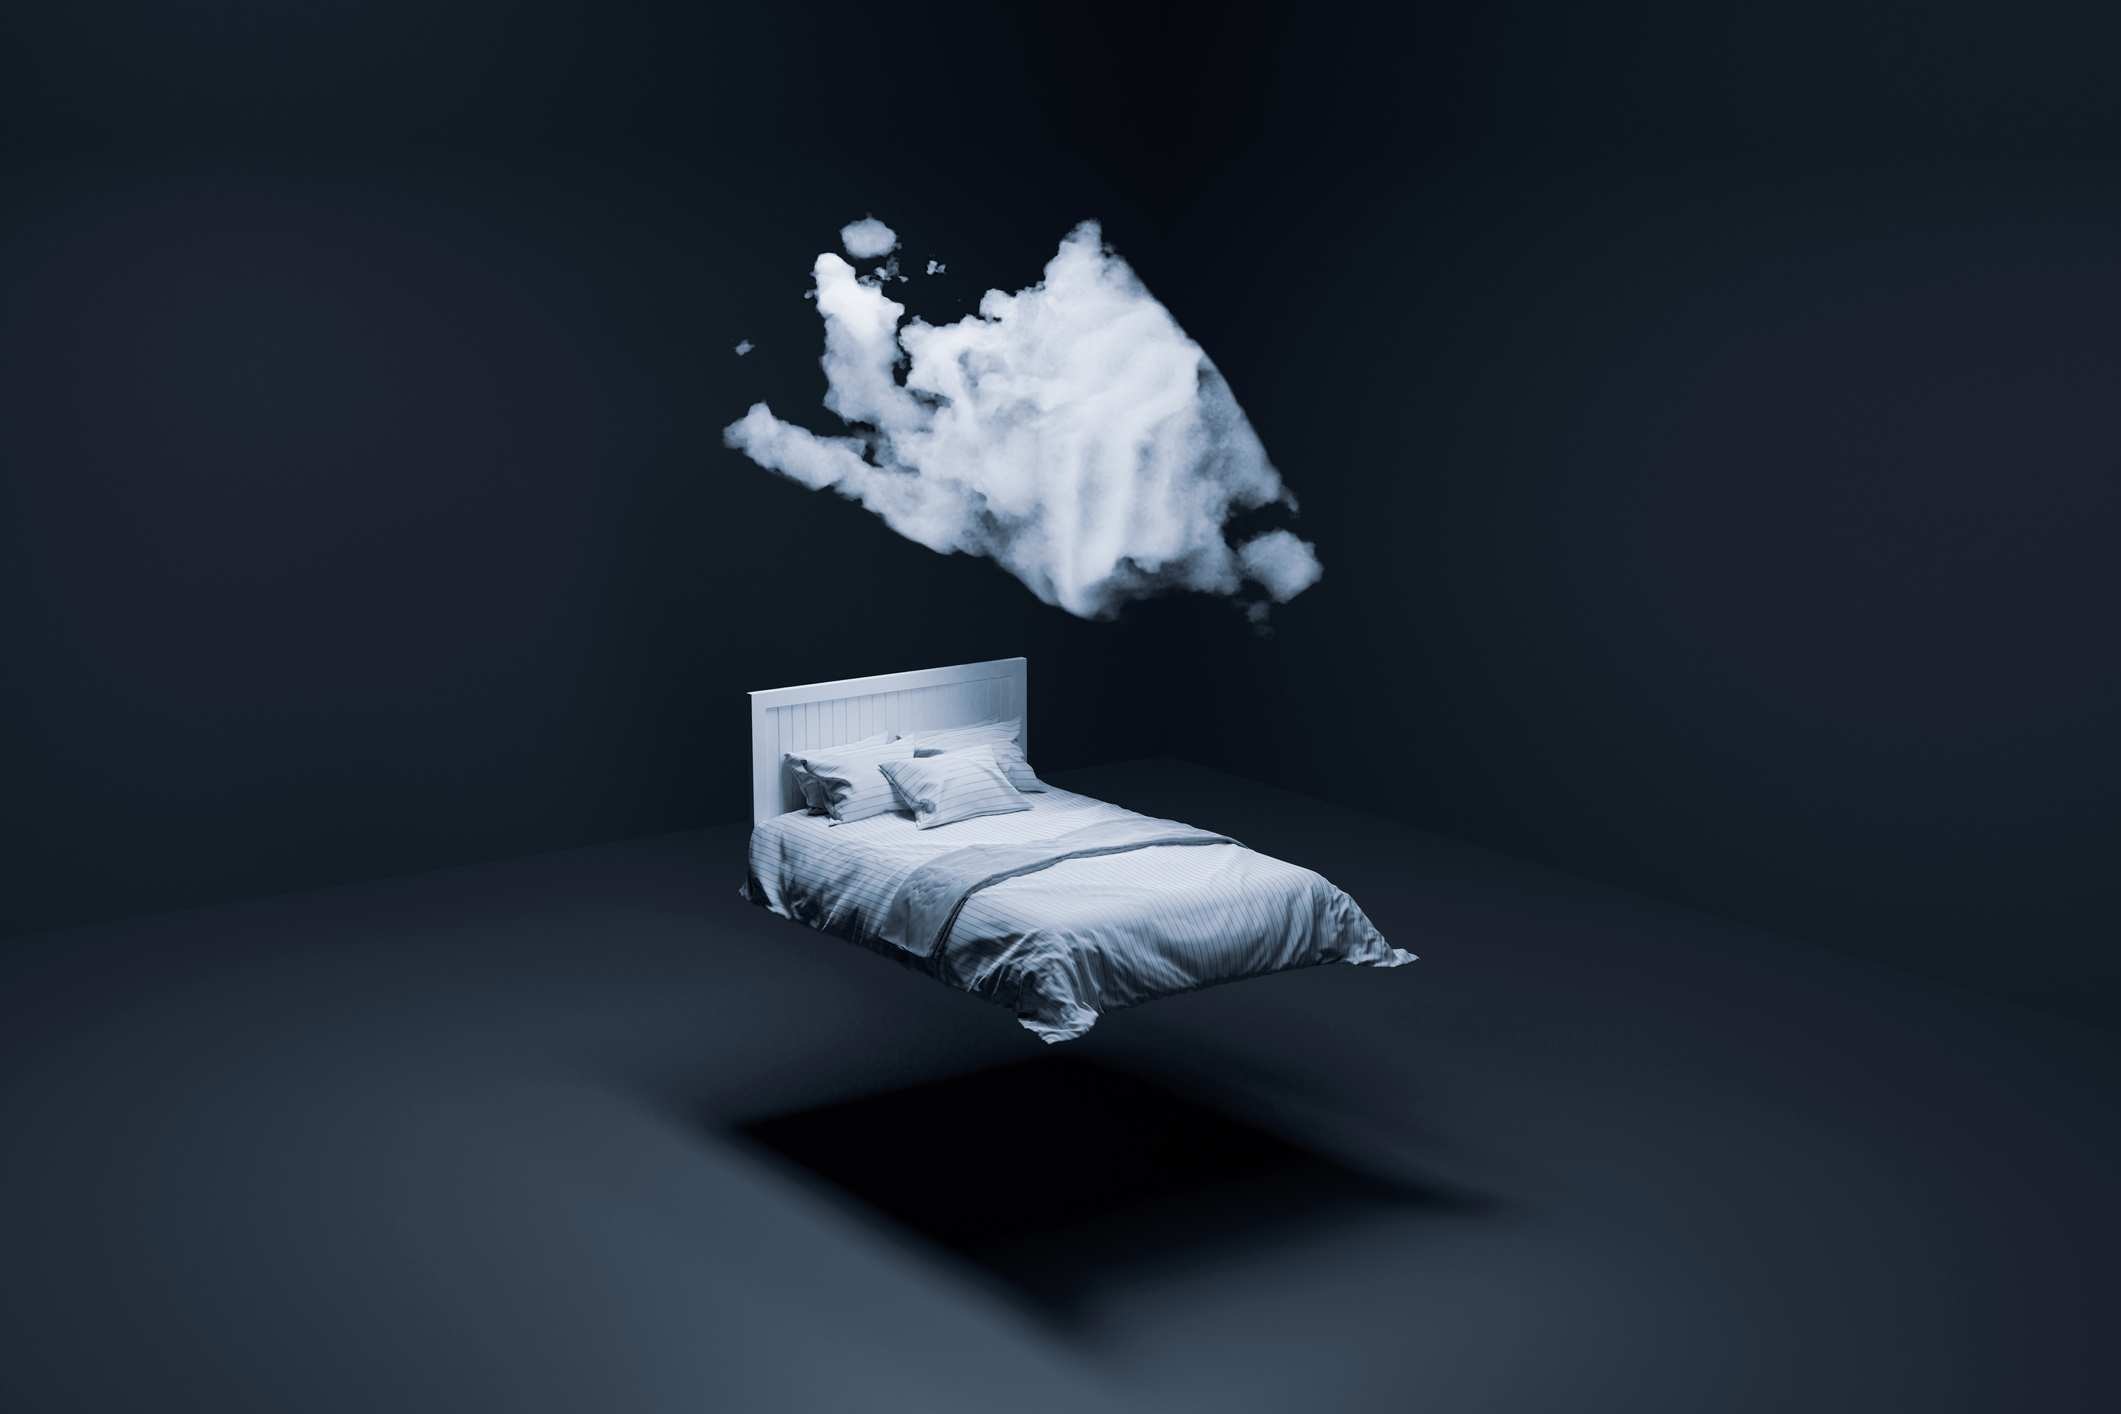 'As real as waking life' — exploring lucid dreams